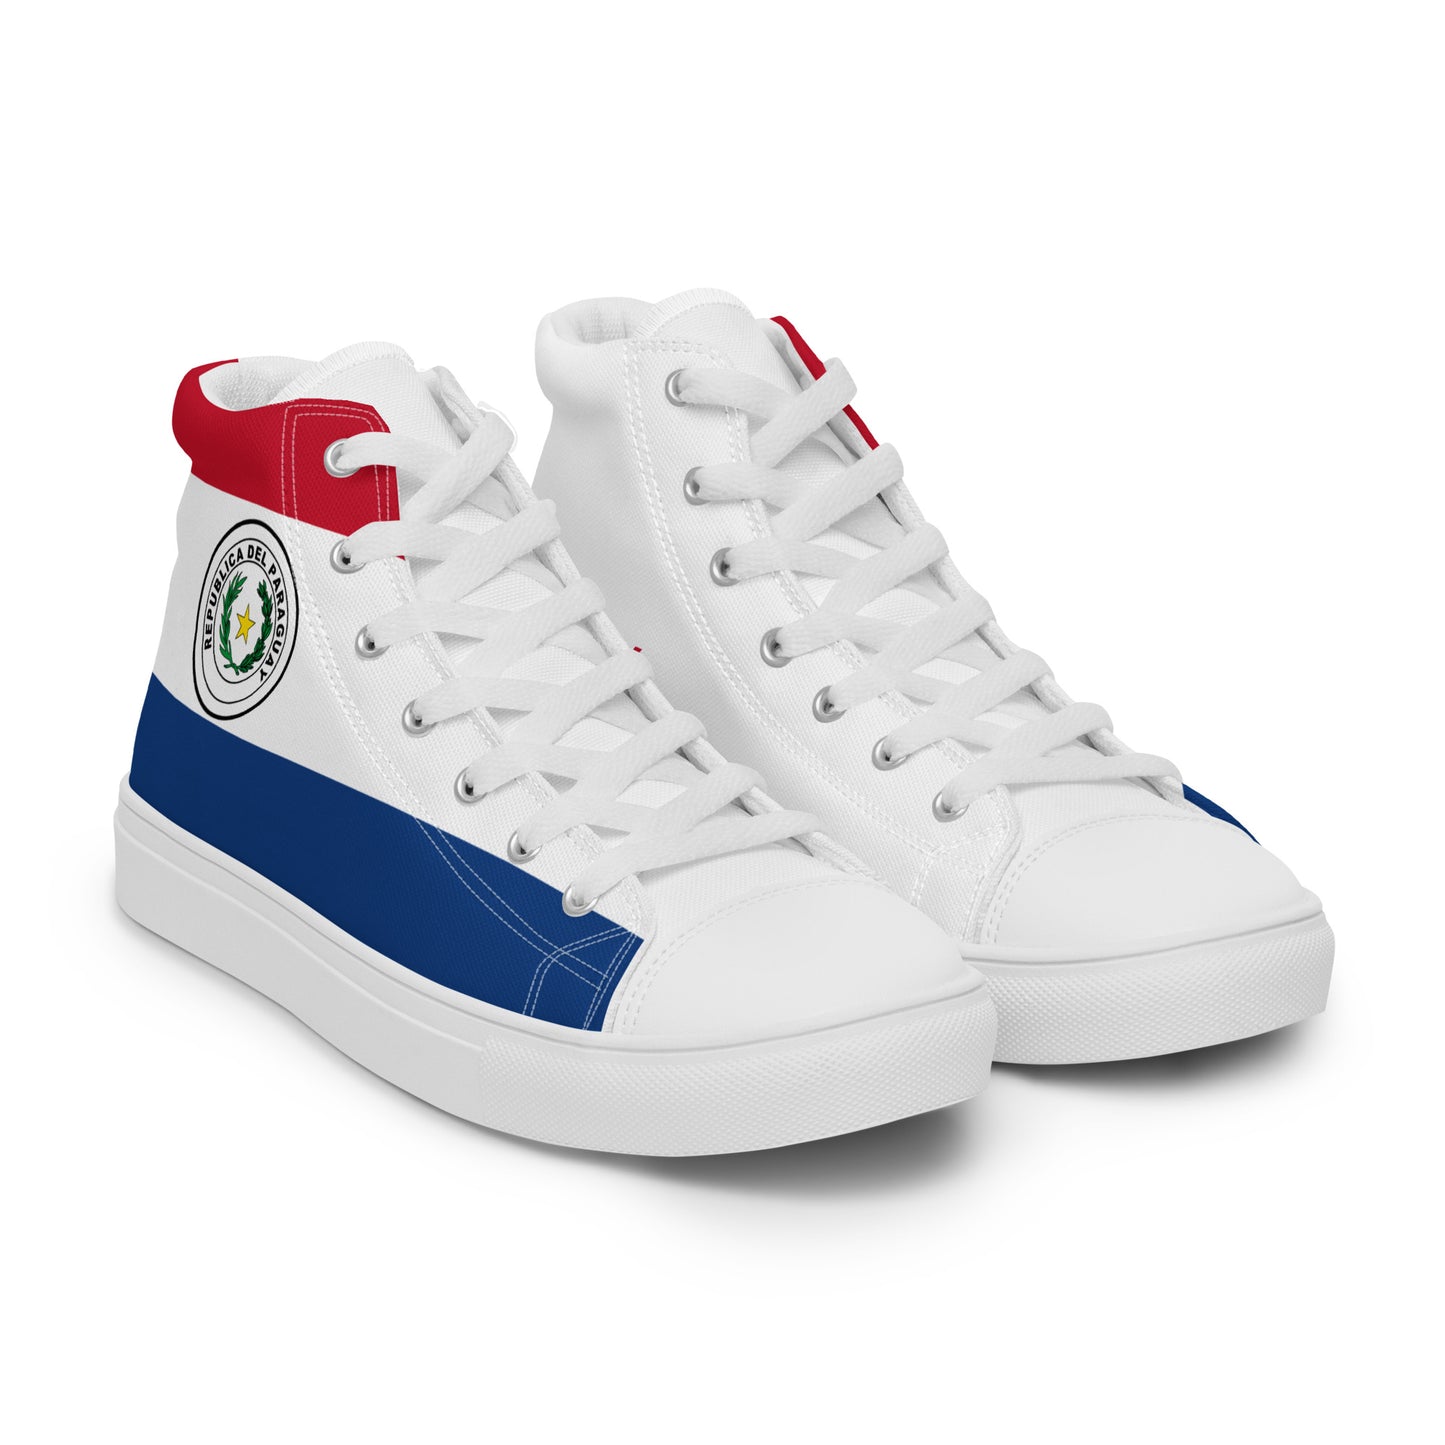 Paraguay - Men - Bandera - High top shoes